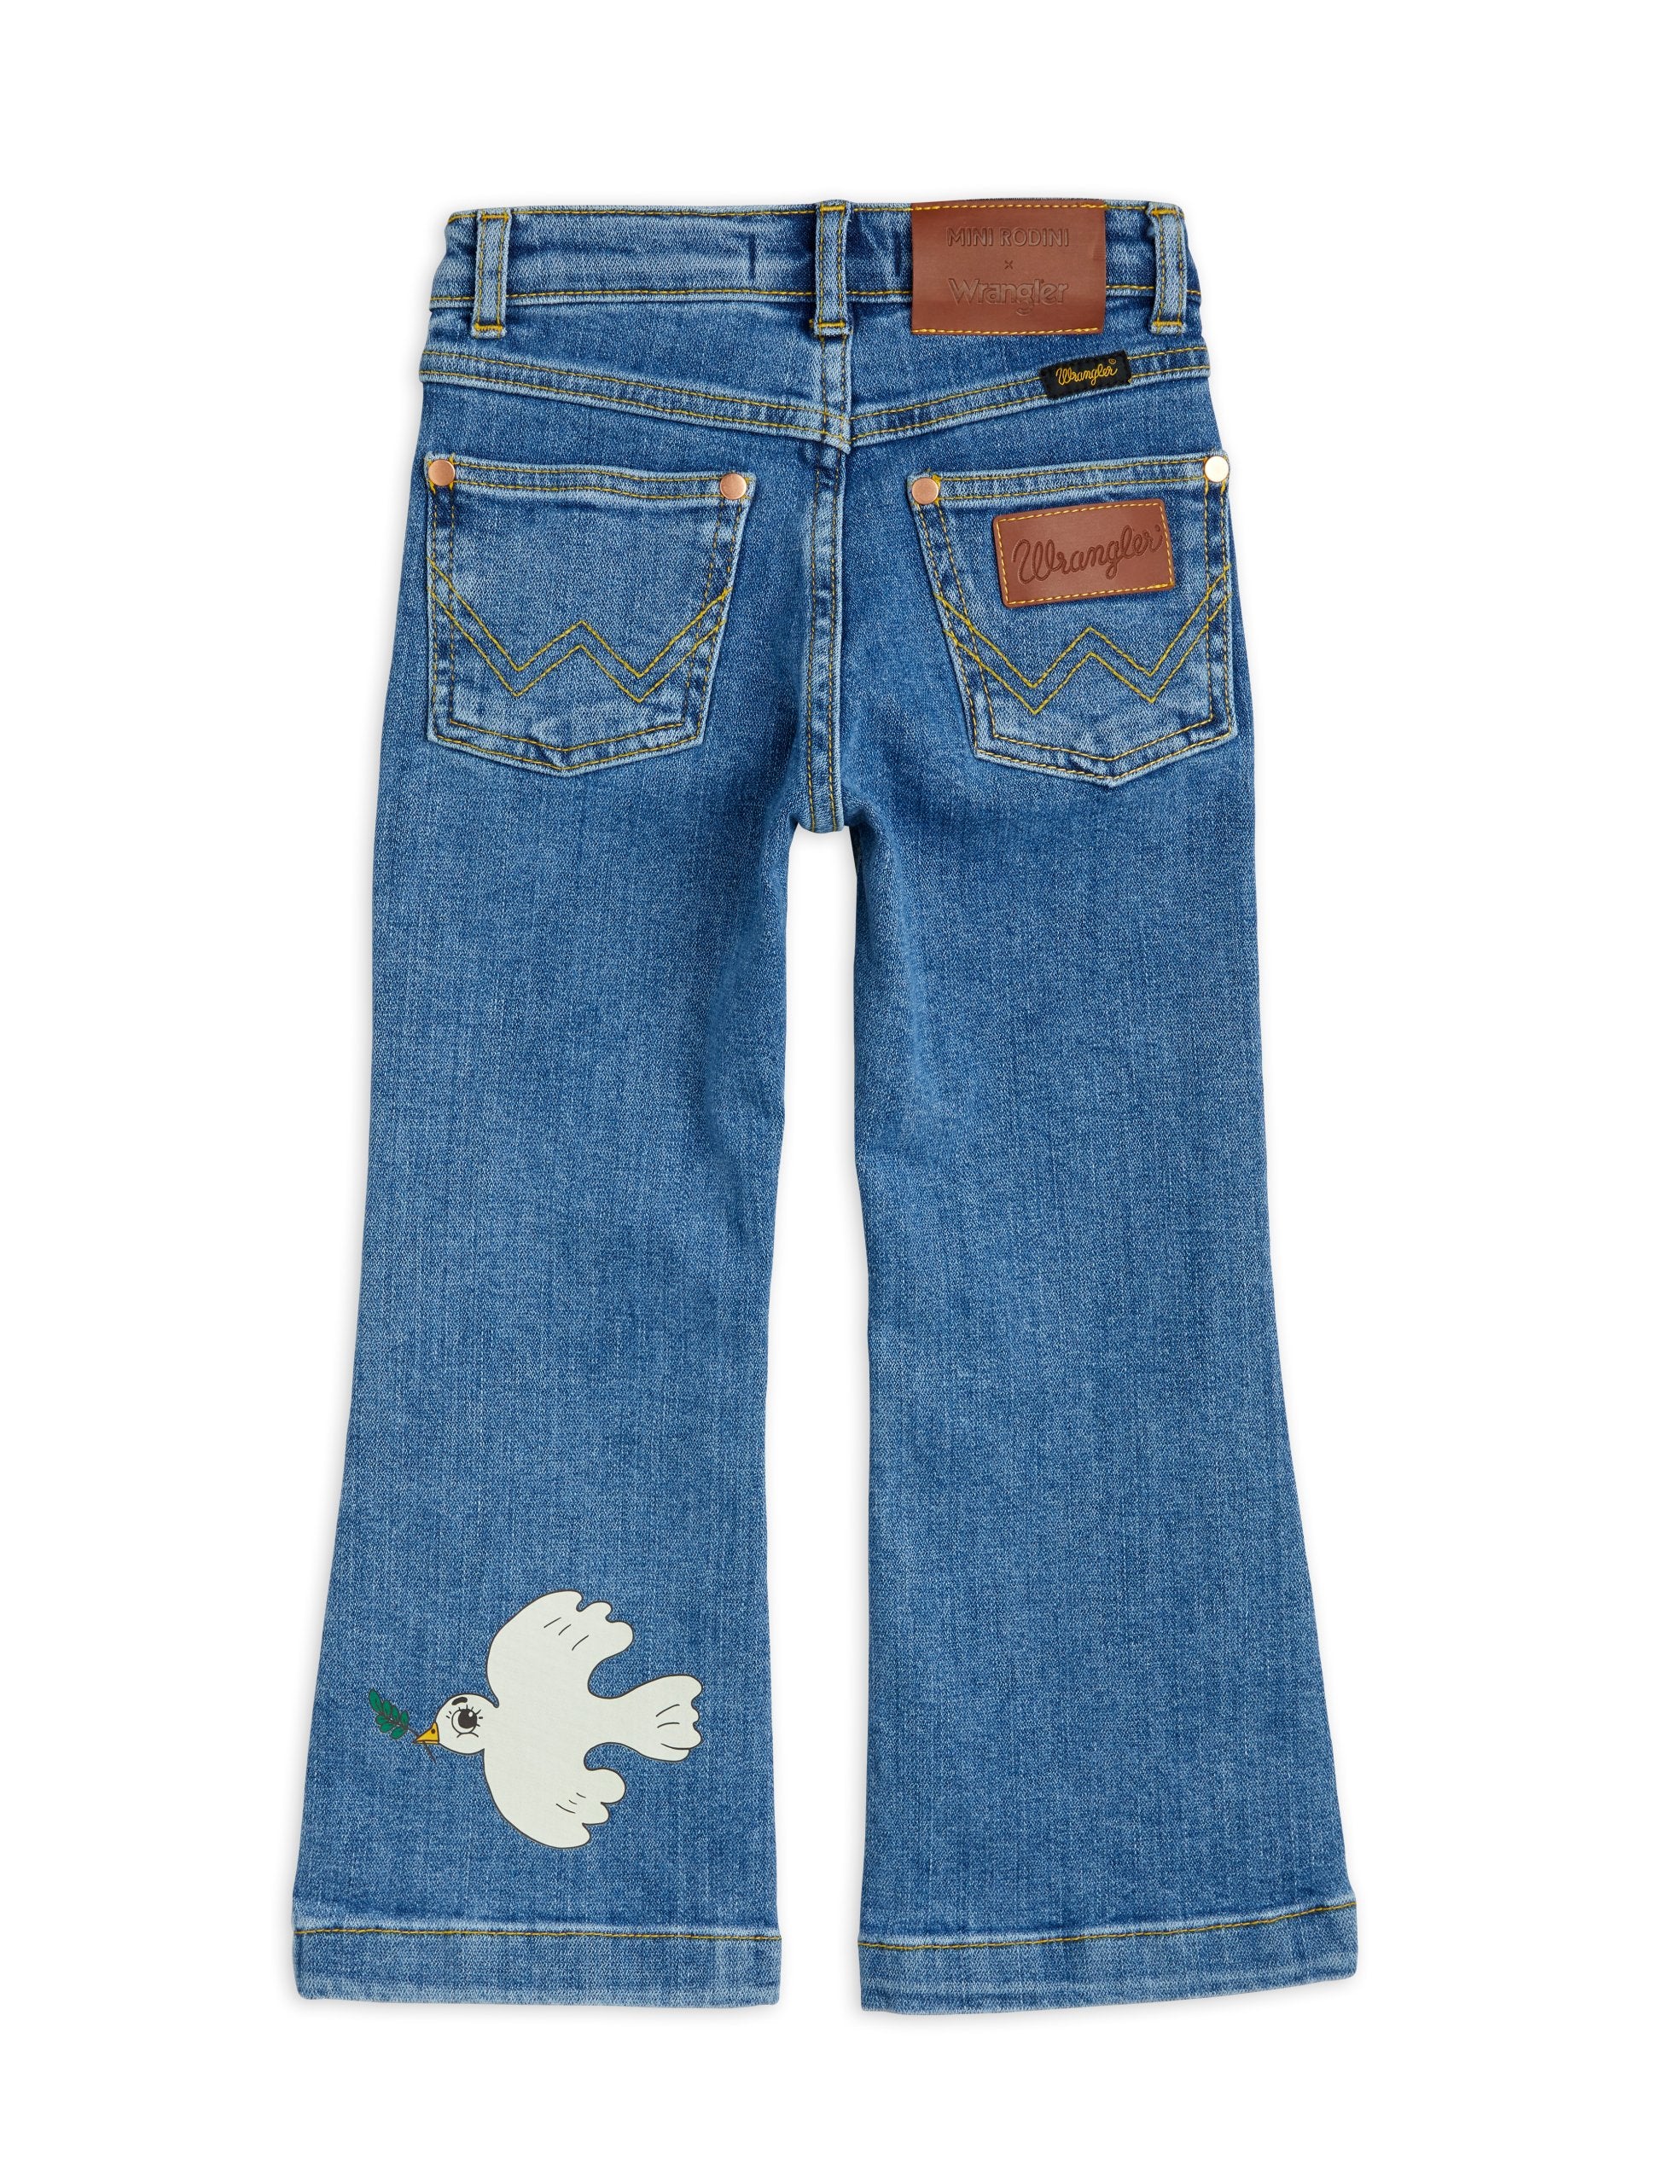 Mini Rodini X Wrangler | Peace dove denim flared jeans